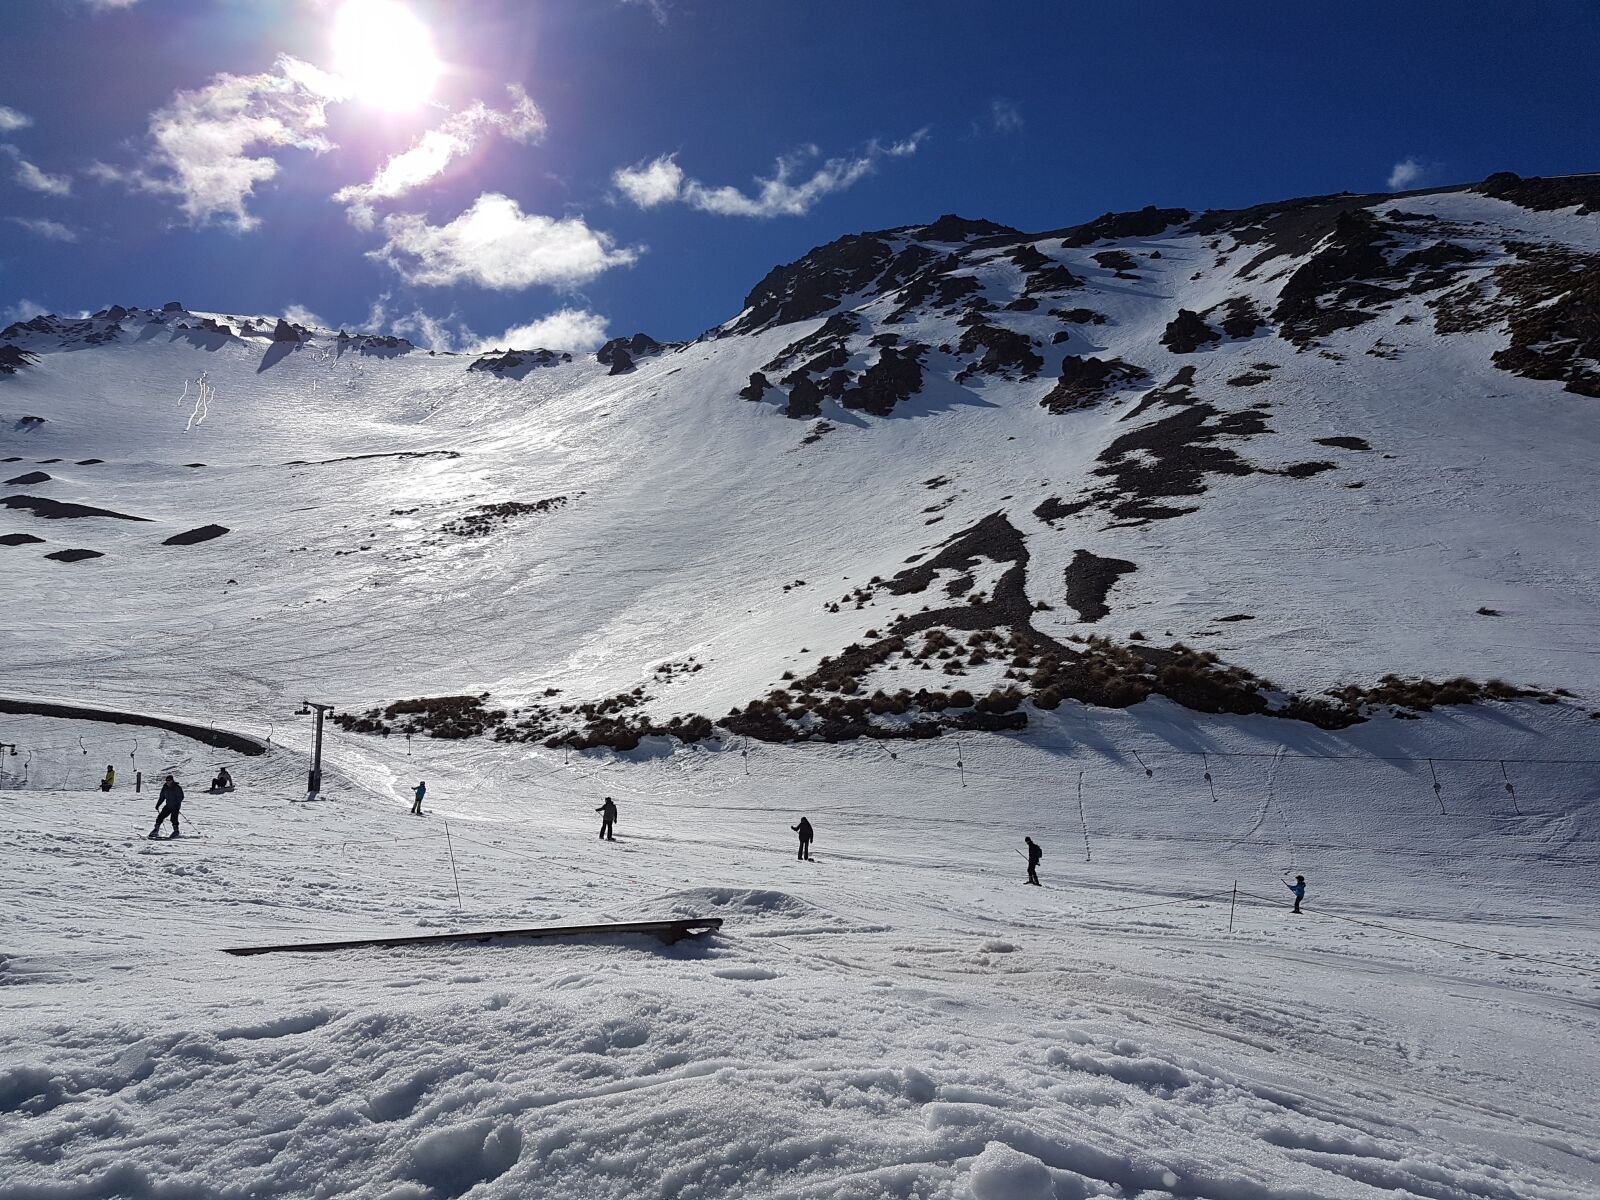 Samsung Galaxy S7 sample photo. Snow, mountains, winter photography